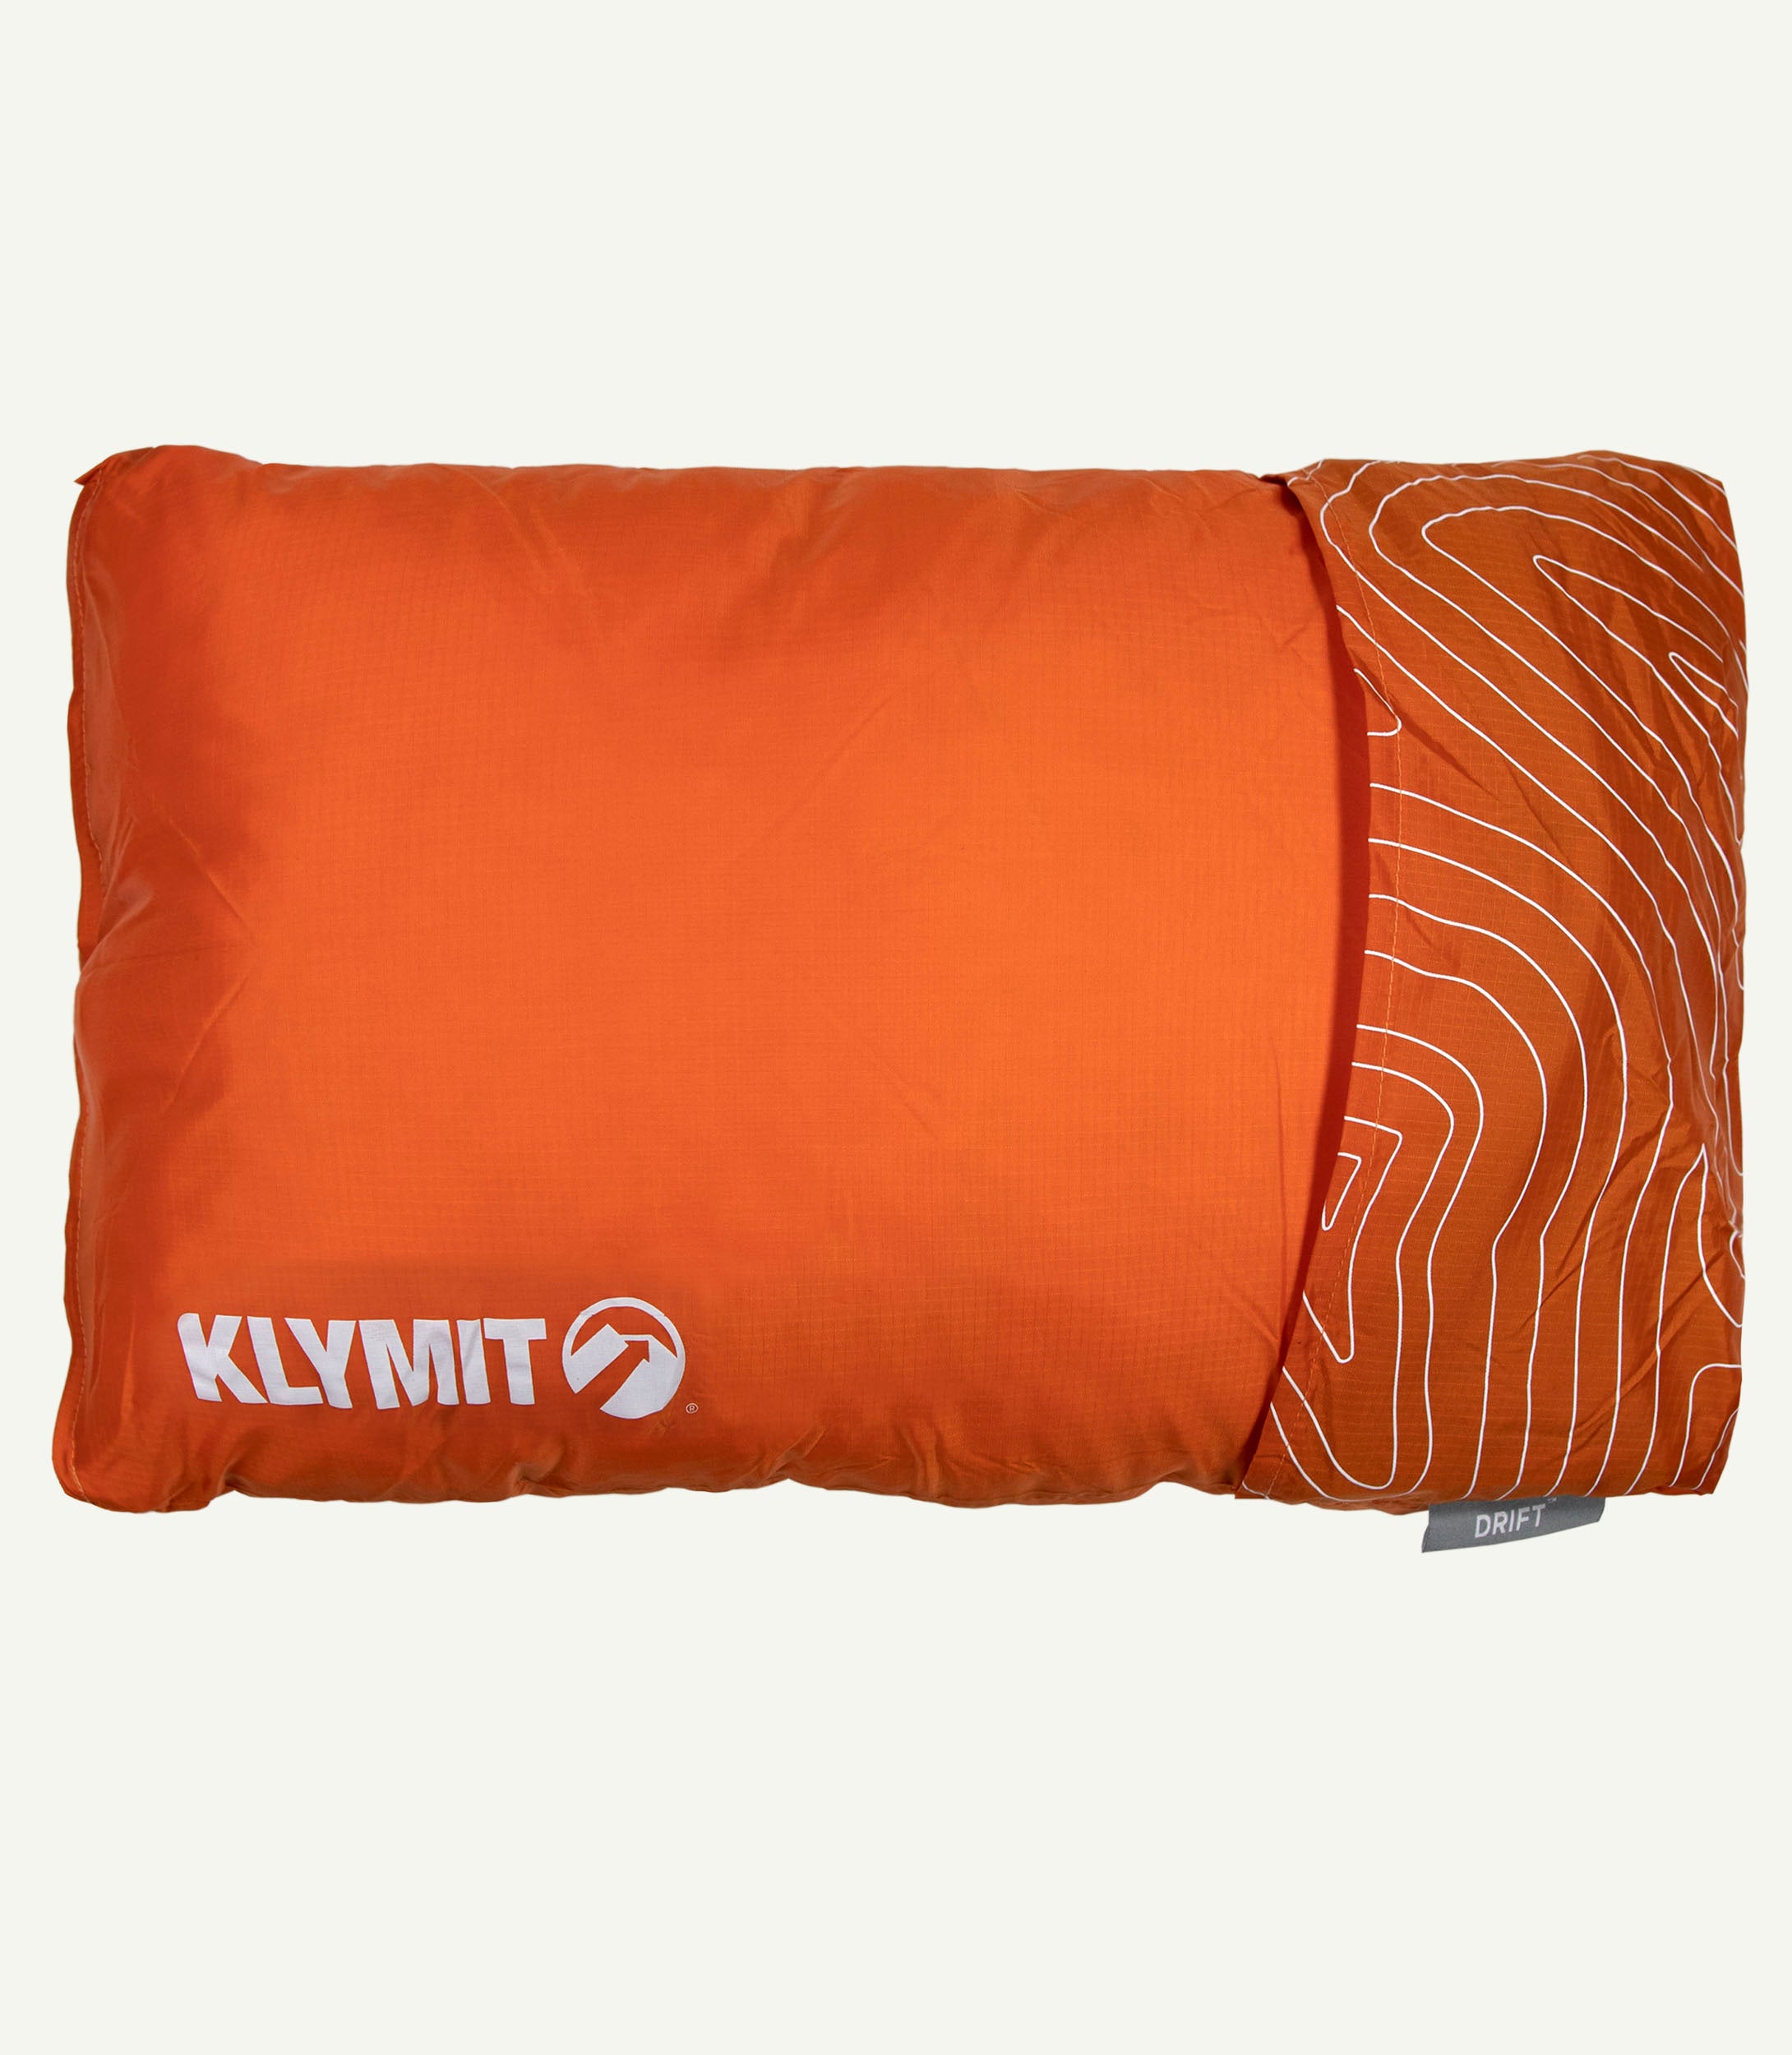 Drift Pillow LARGE Orange